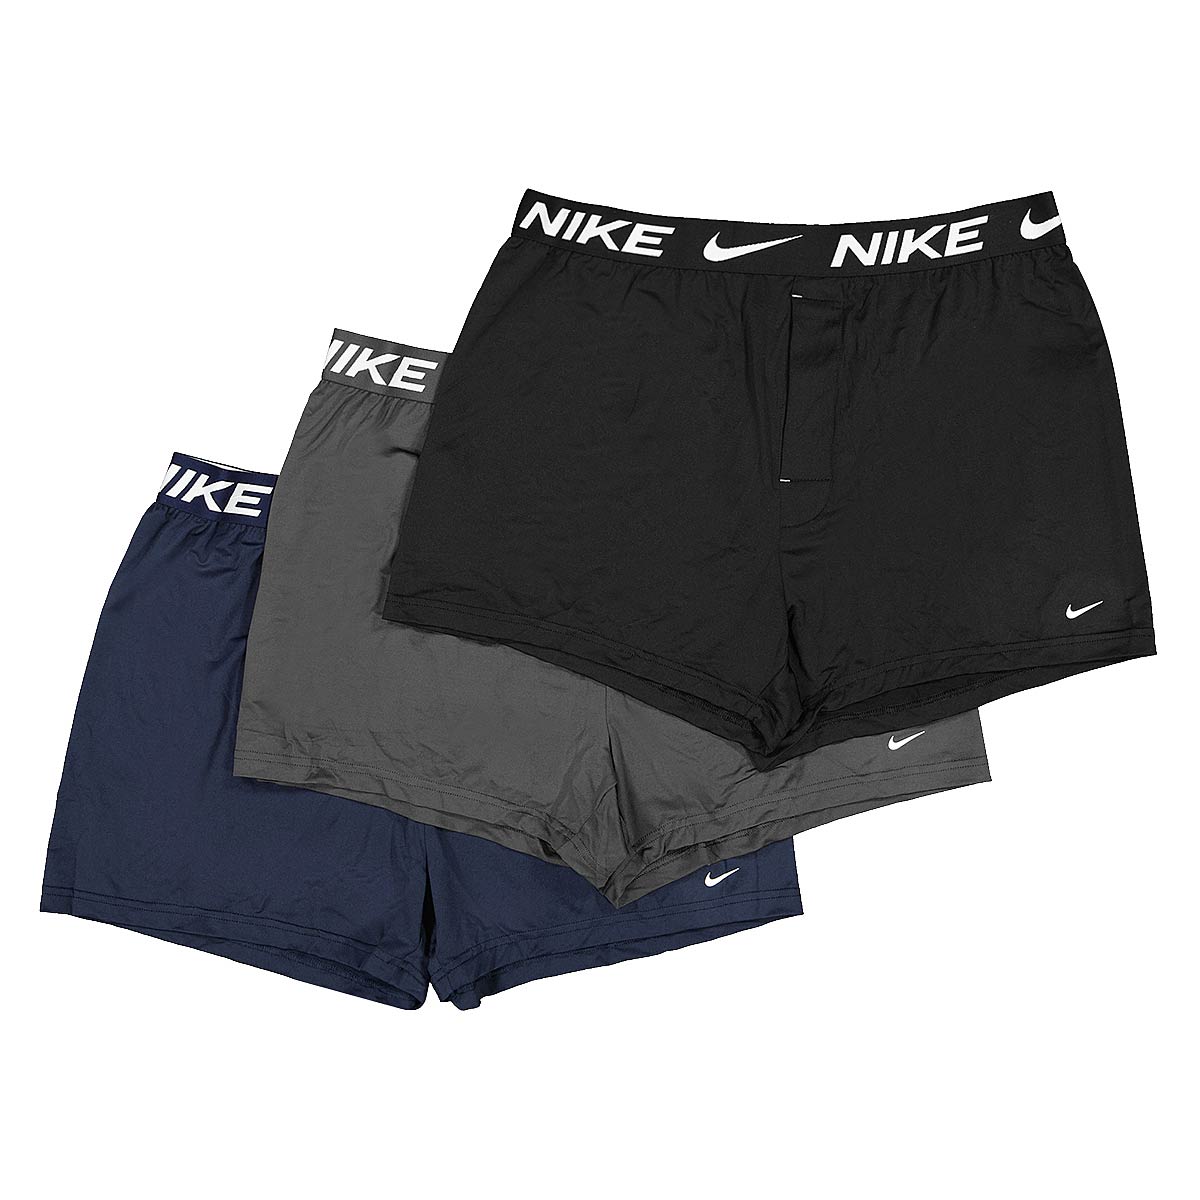 Image of Nike Boxer 3pk, Black/blue/grey